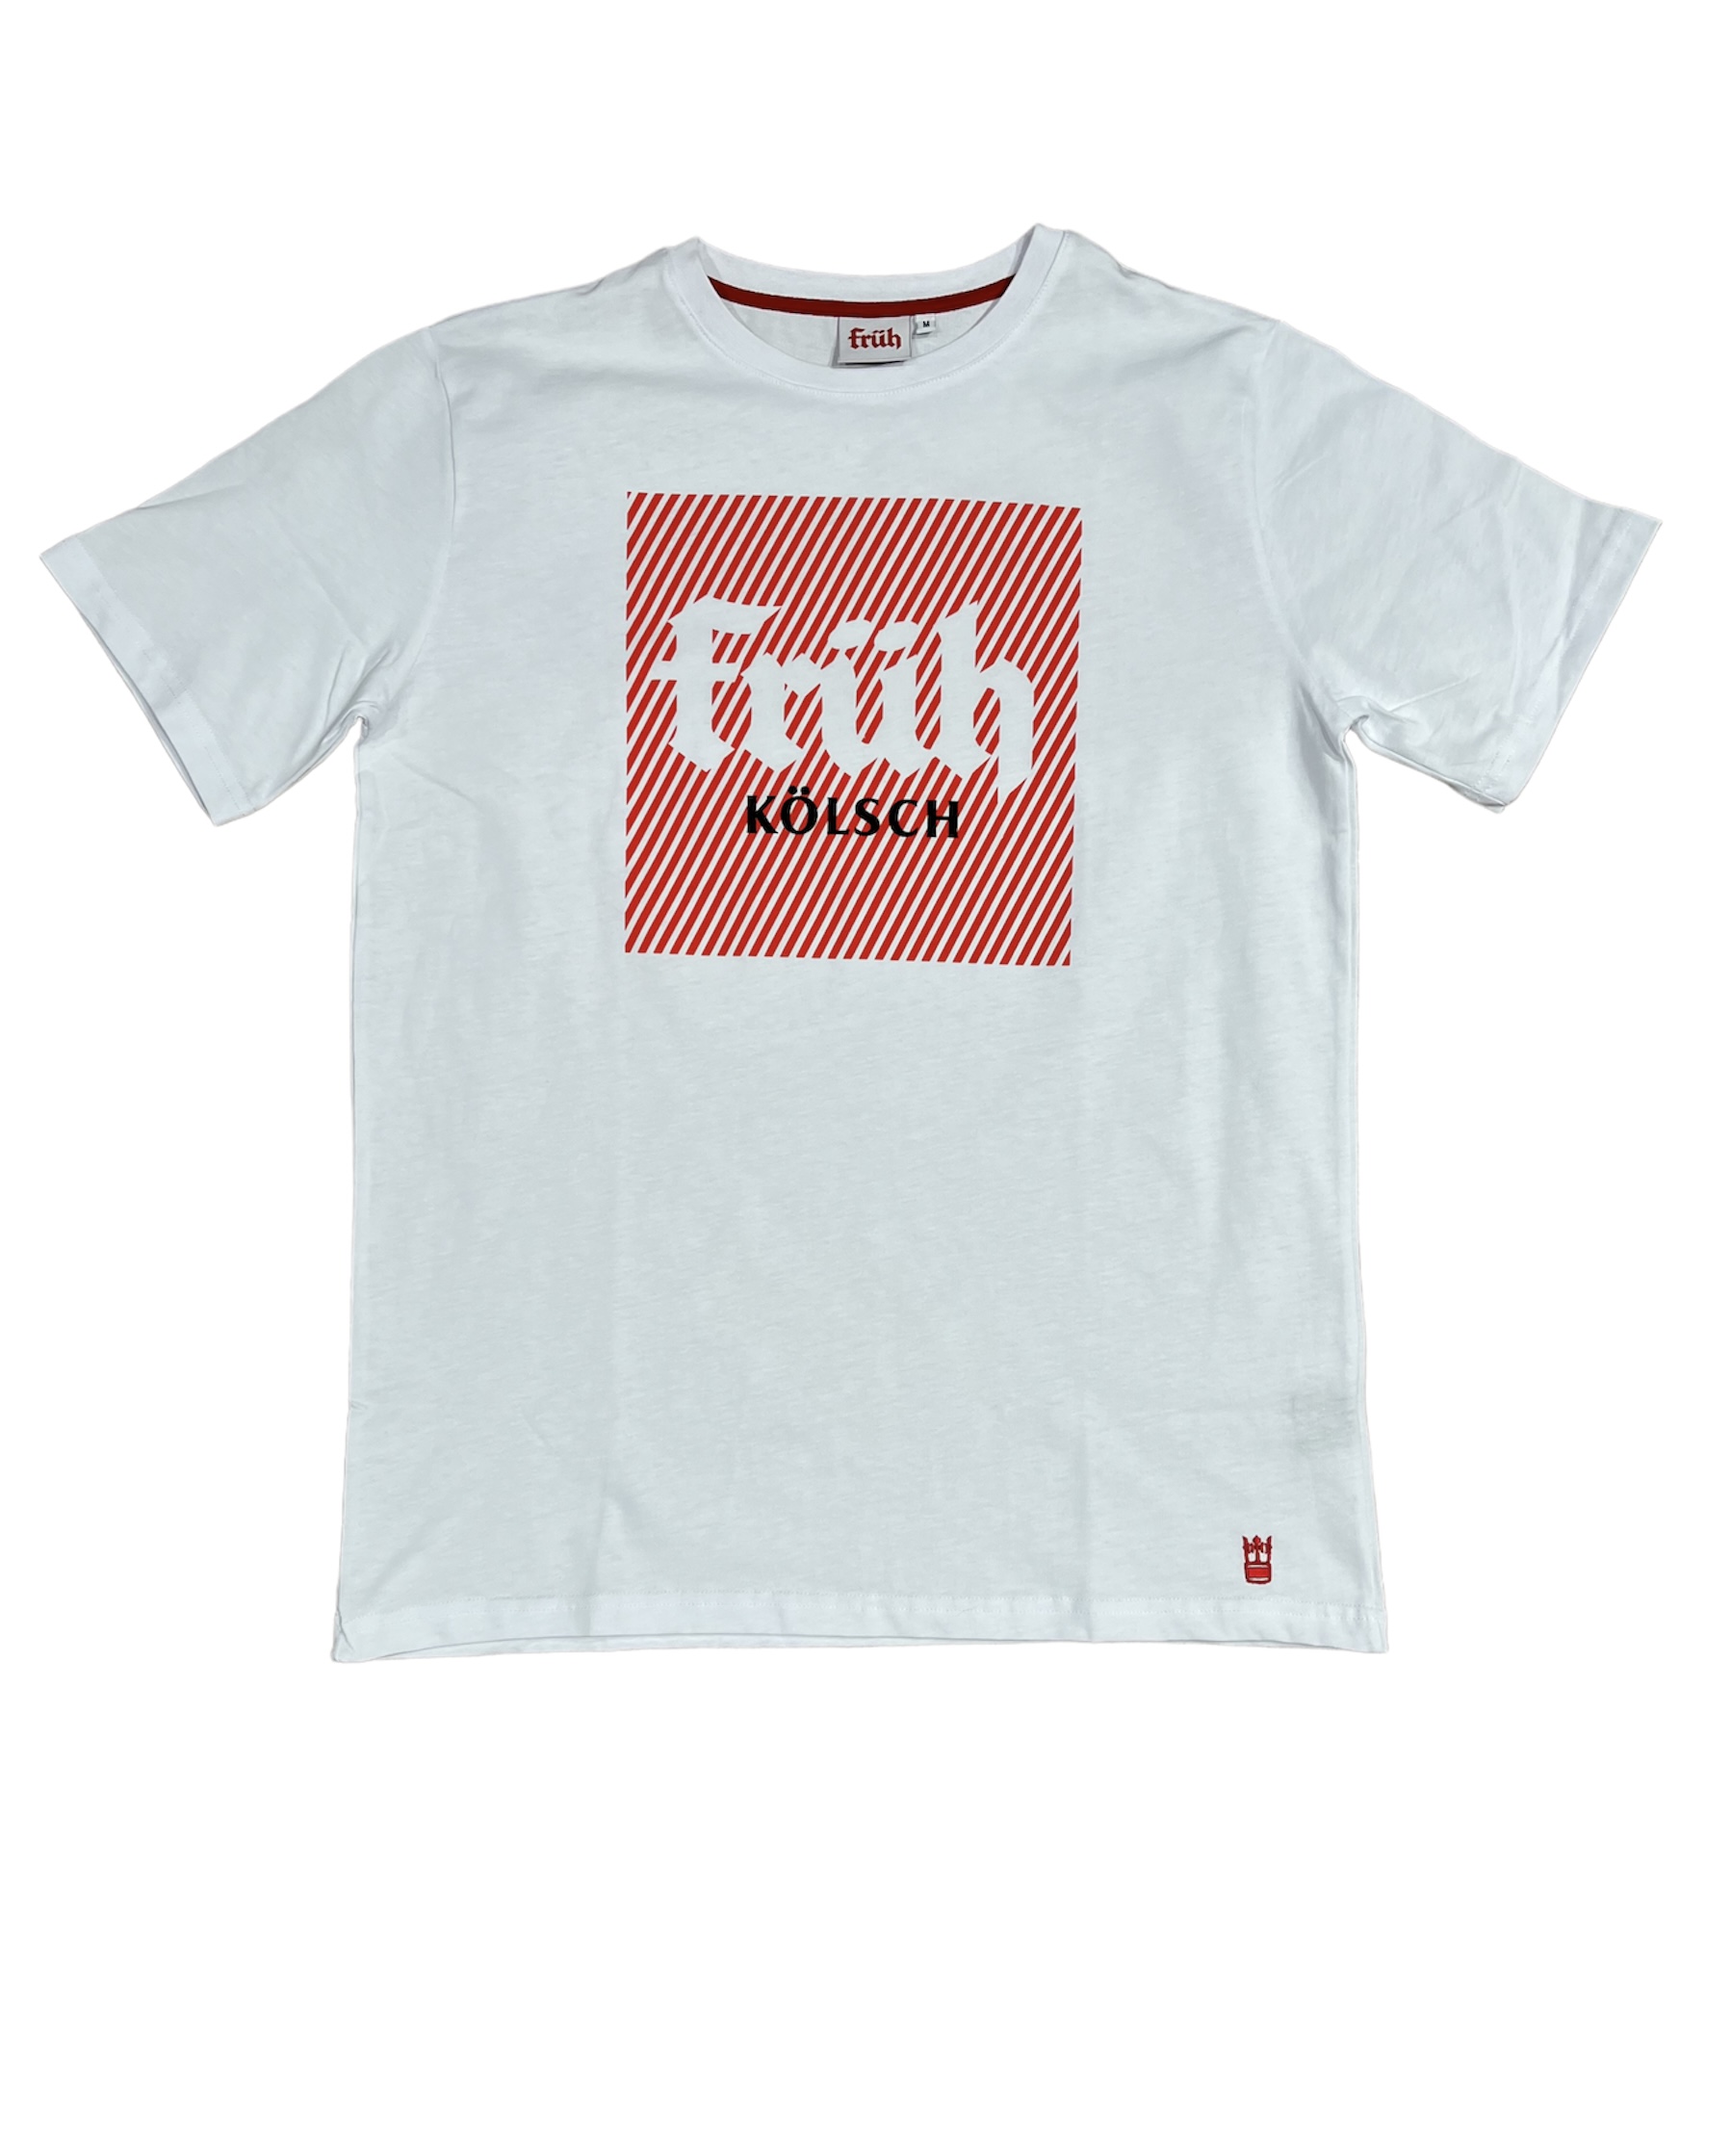 Früh Shirt weiss mit Früh Quadrat Logo XXXXL